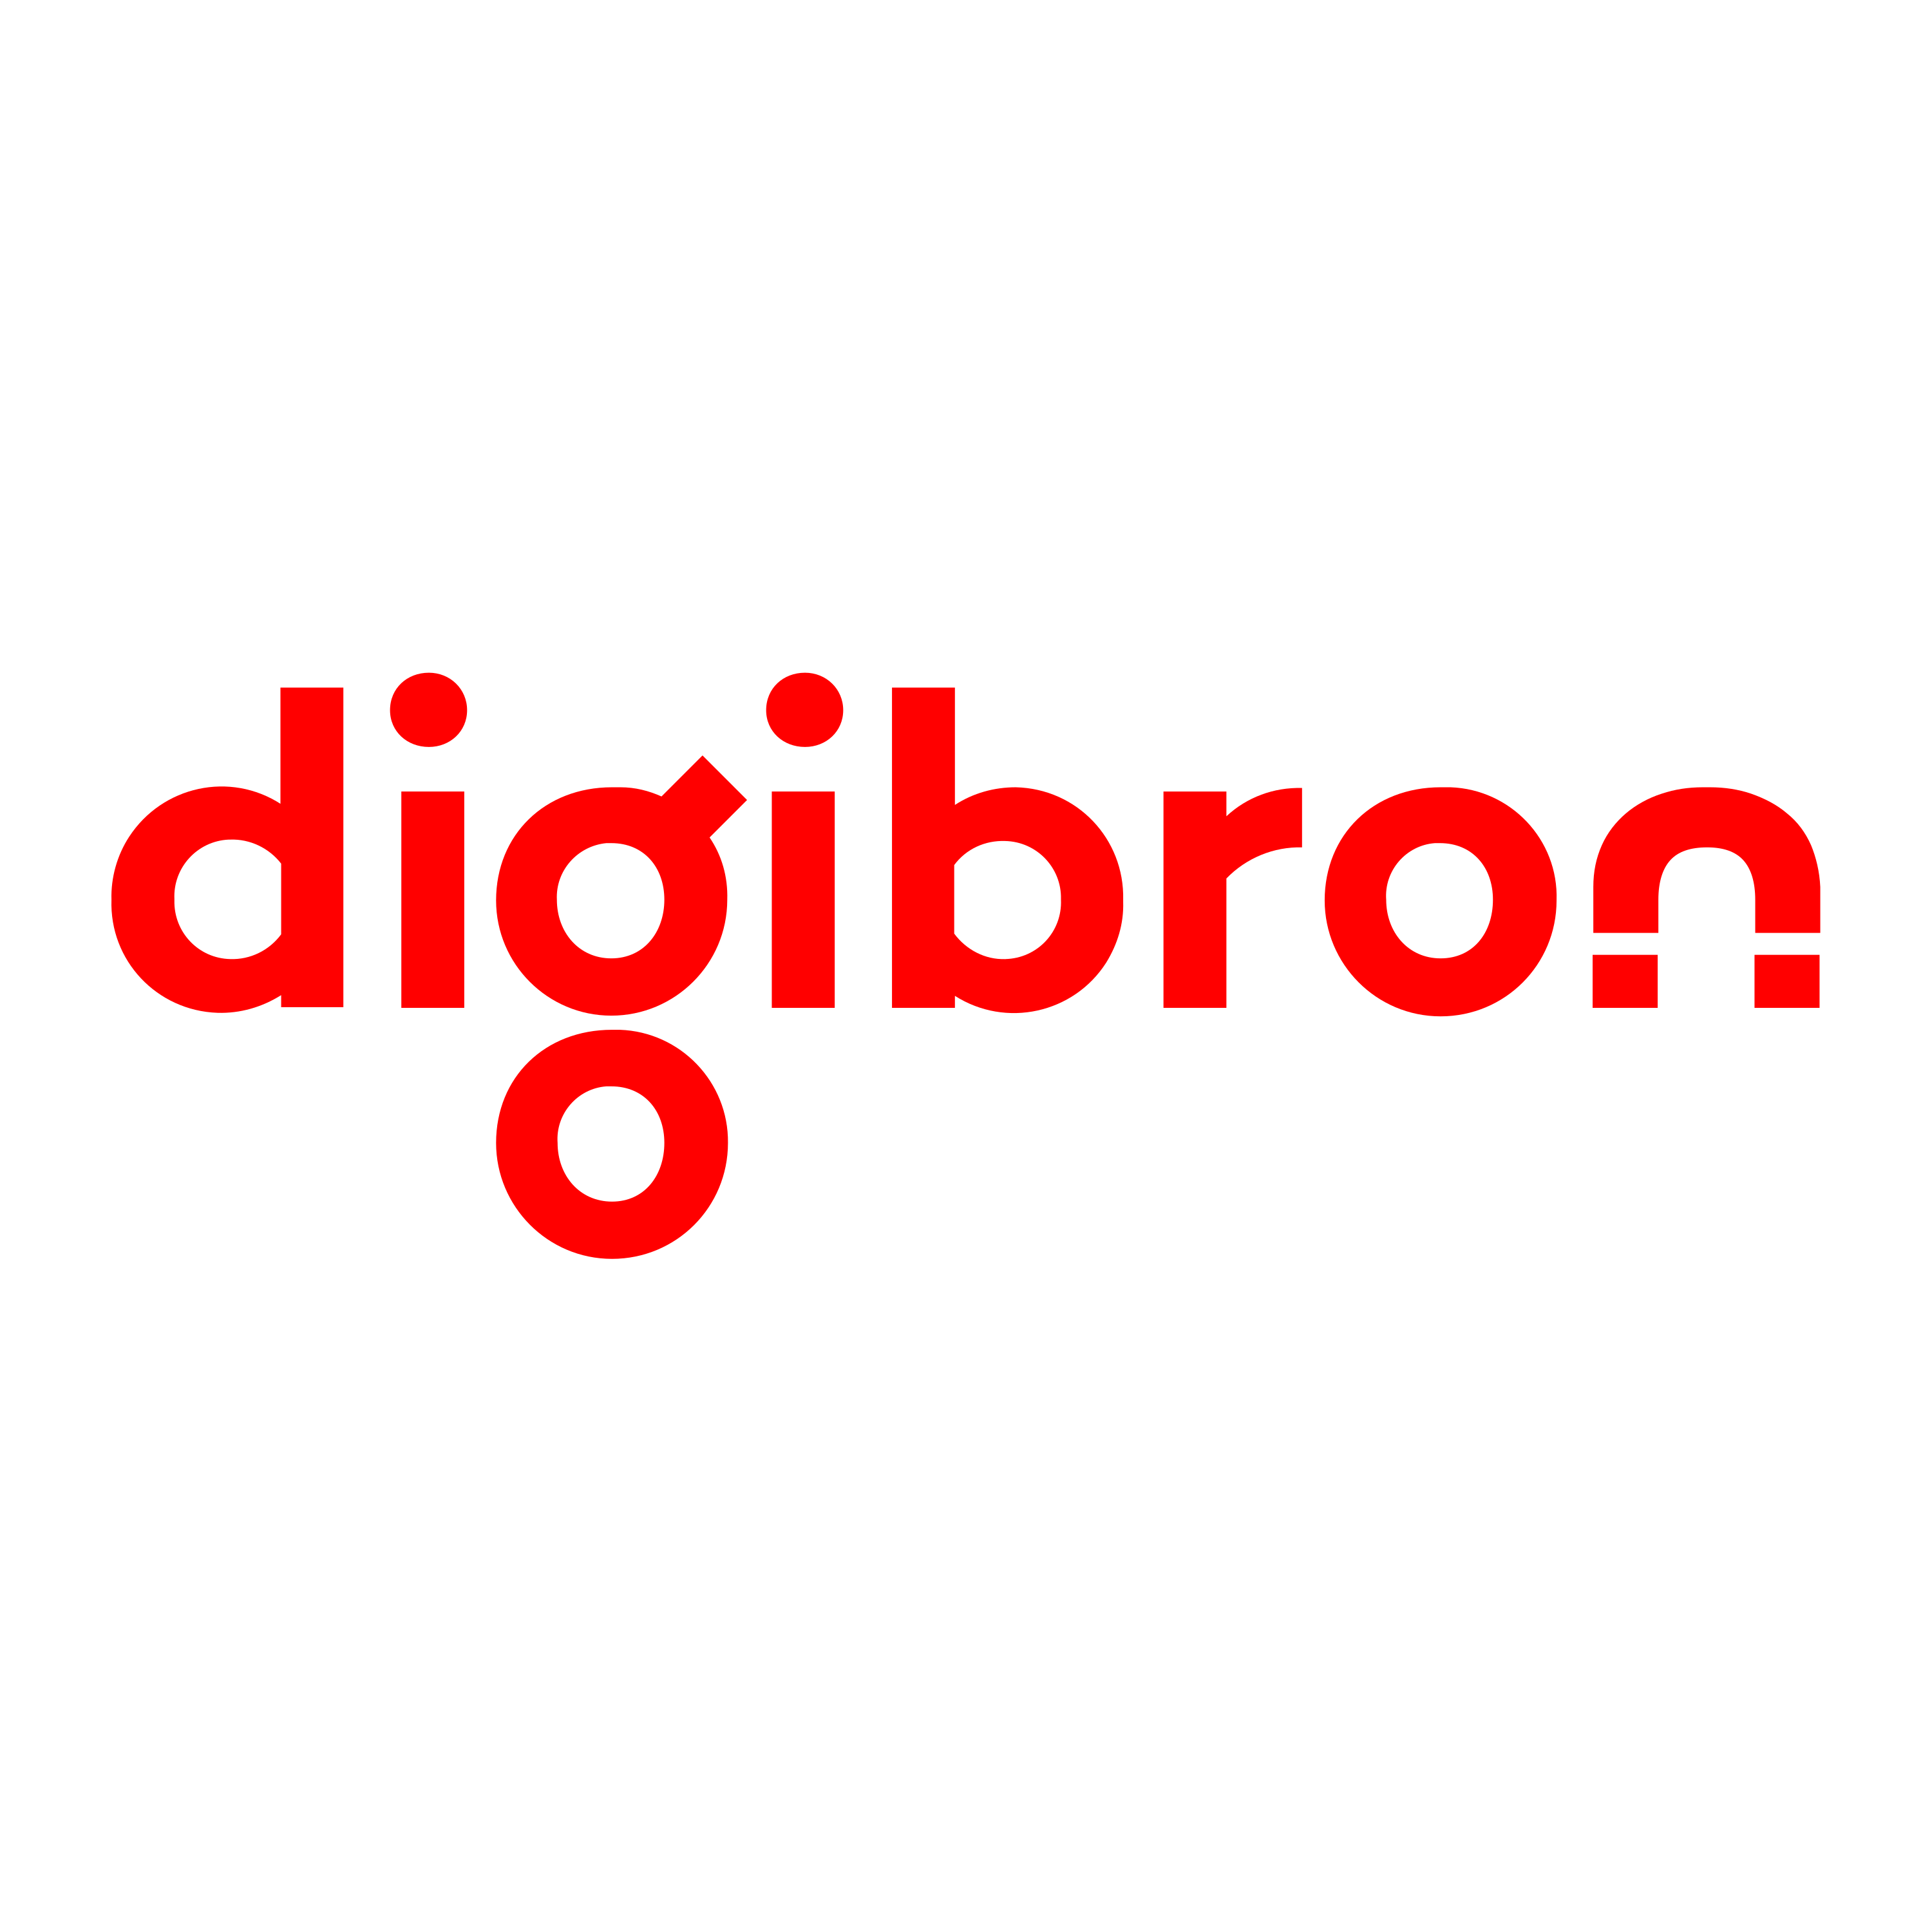 Digibron Color Logo  Transparent Clipart